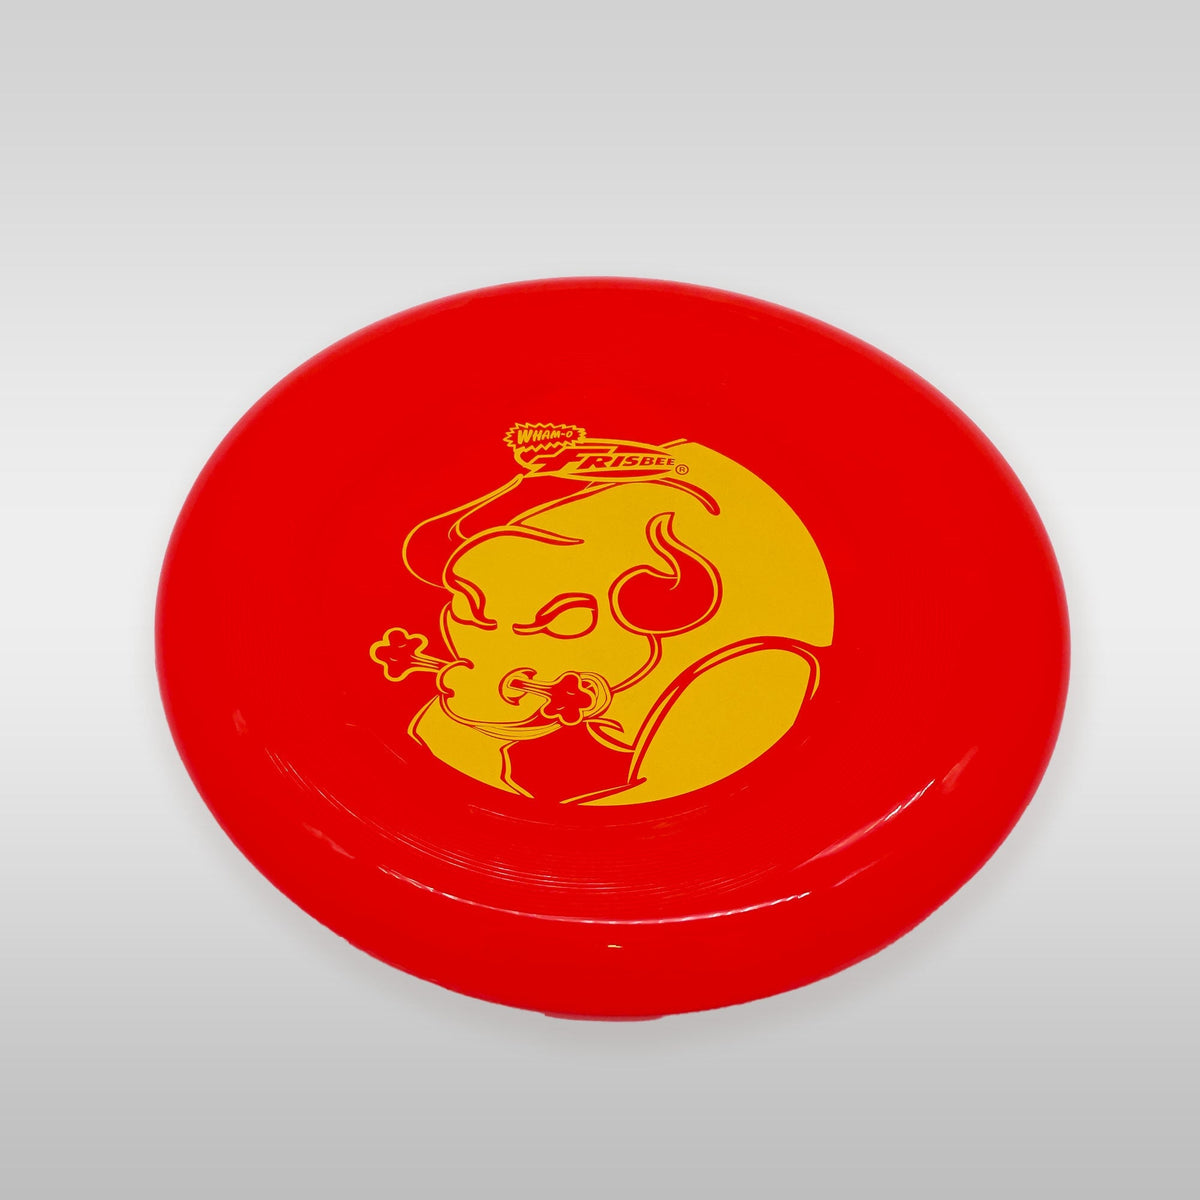 Frisbee® Go 70g (verschiedene Farben) Frisbee Wham-O rot 